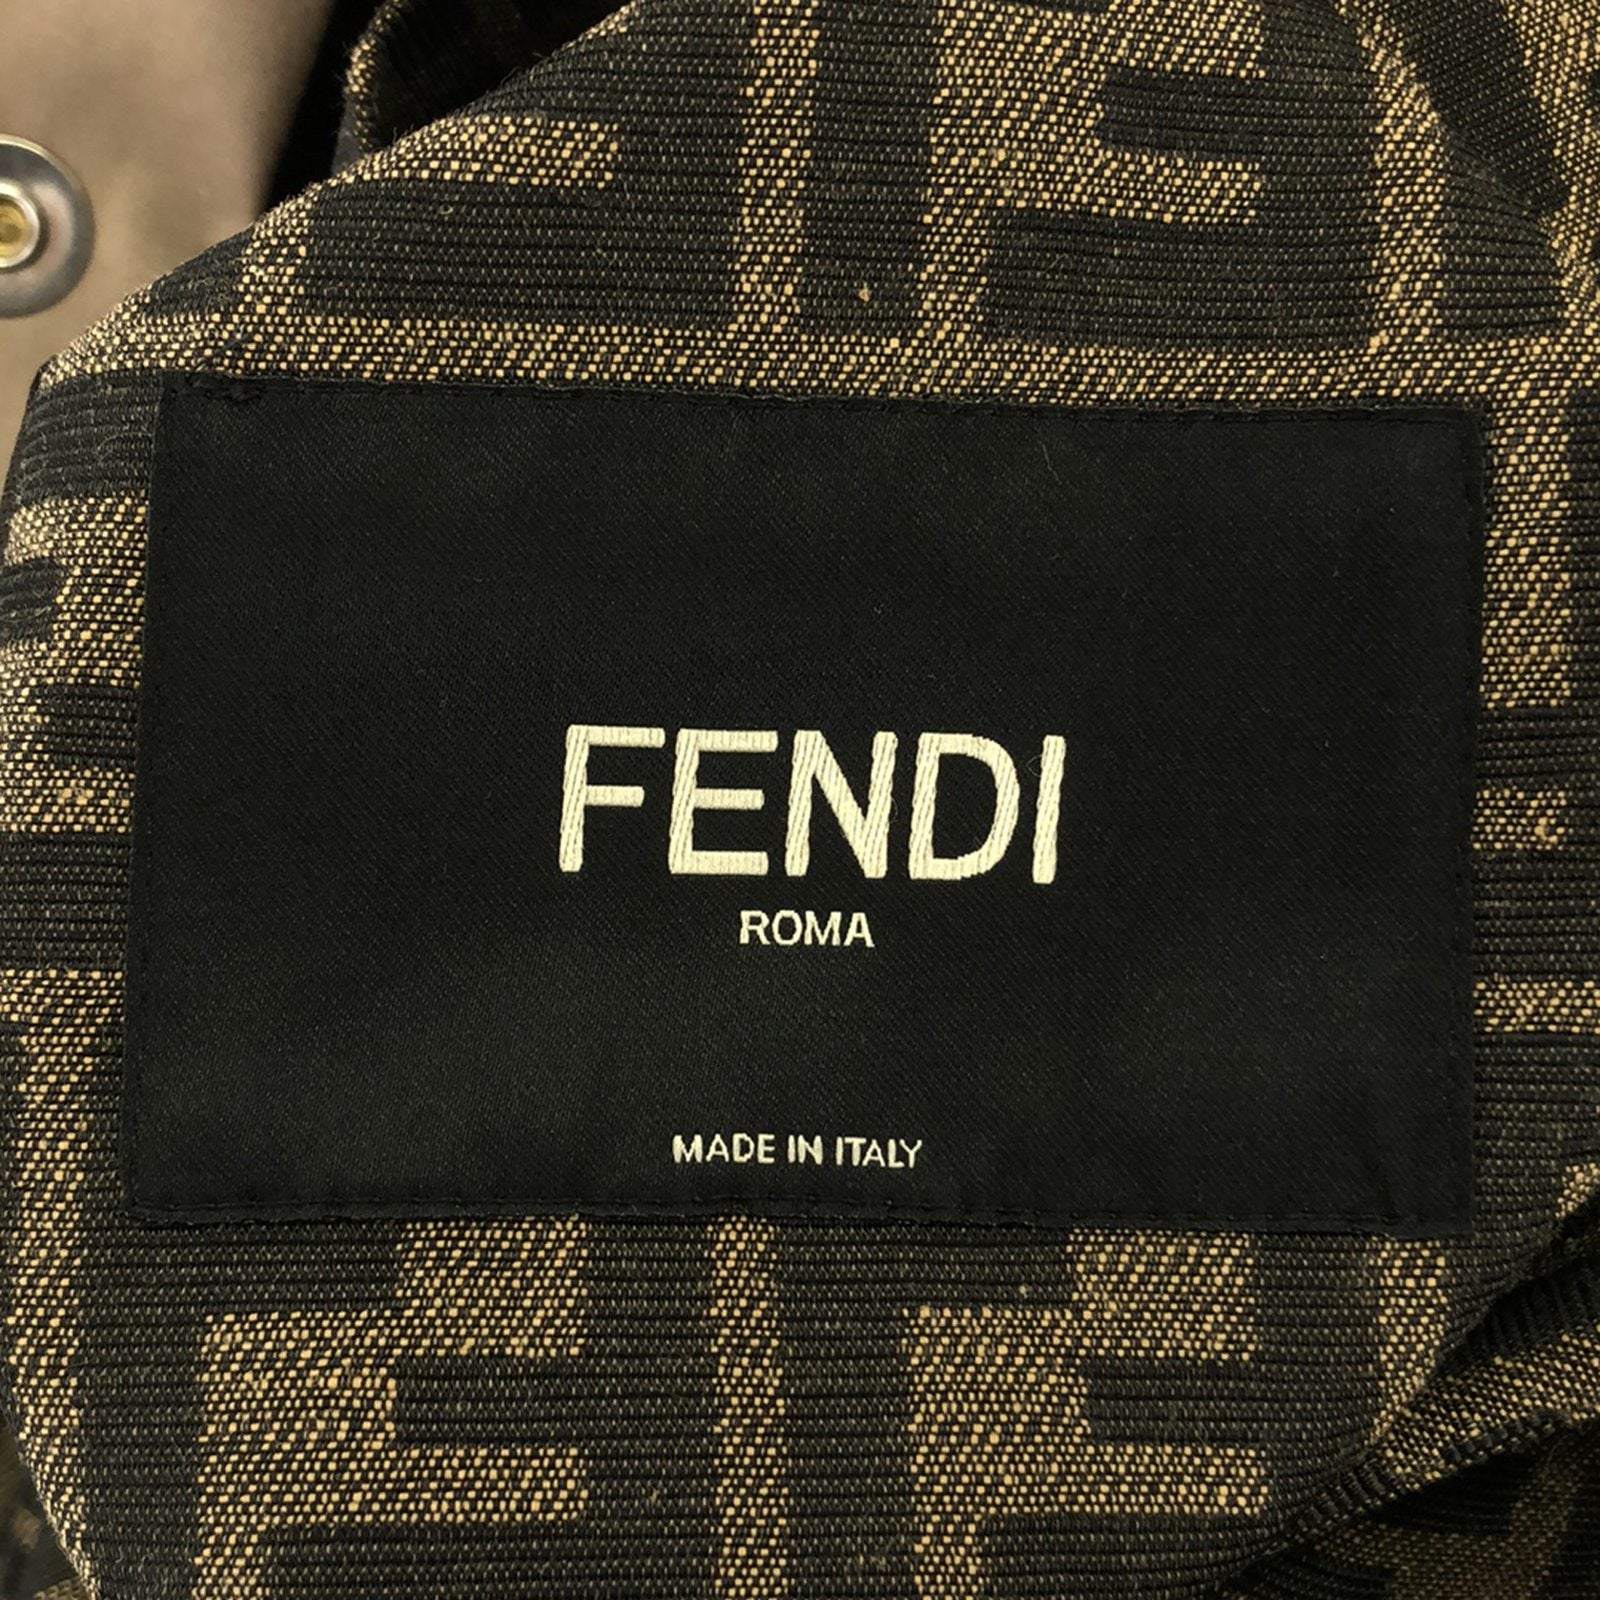 Fendi Fendi Coat Outdoor Cotton  Beige FF0741APNGF1M2L50